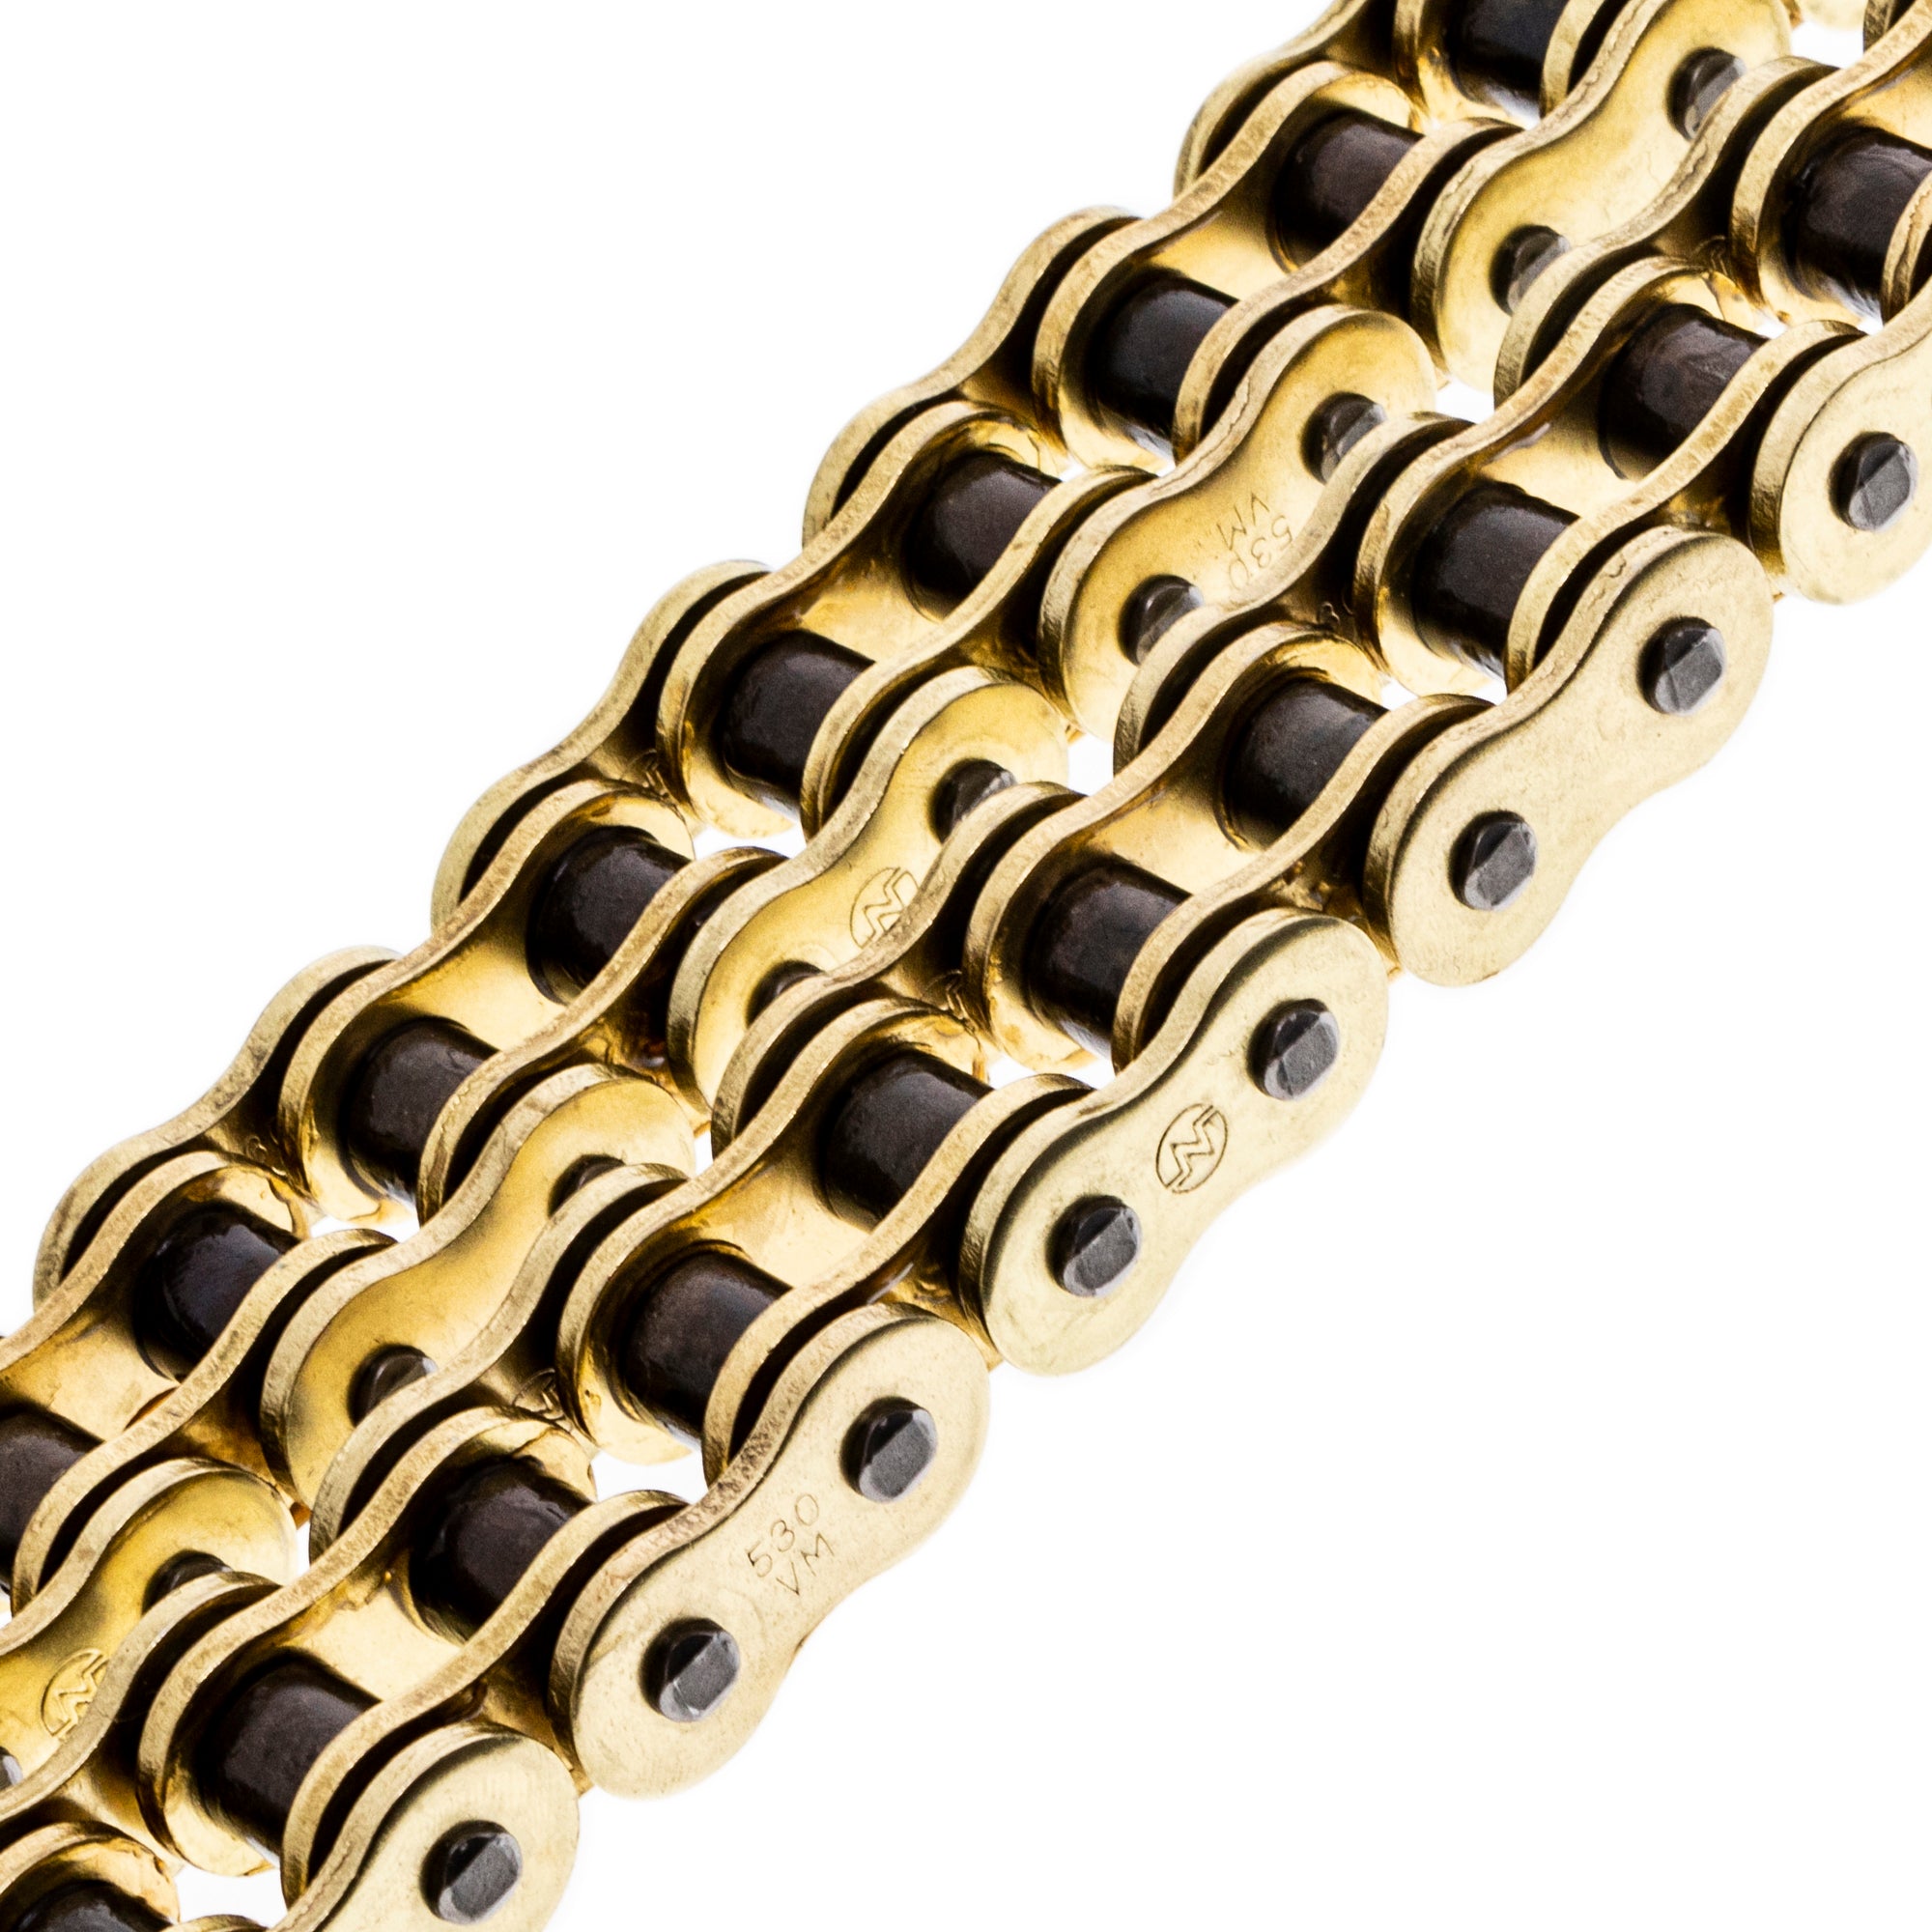 Gold X-Ring Chain 100 w/ Master Link for zOTHER Super KZ550A KZ440B KZ400S 5417 NICHE 519-CDC2528H